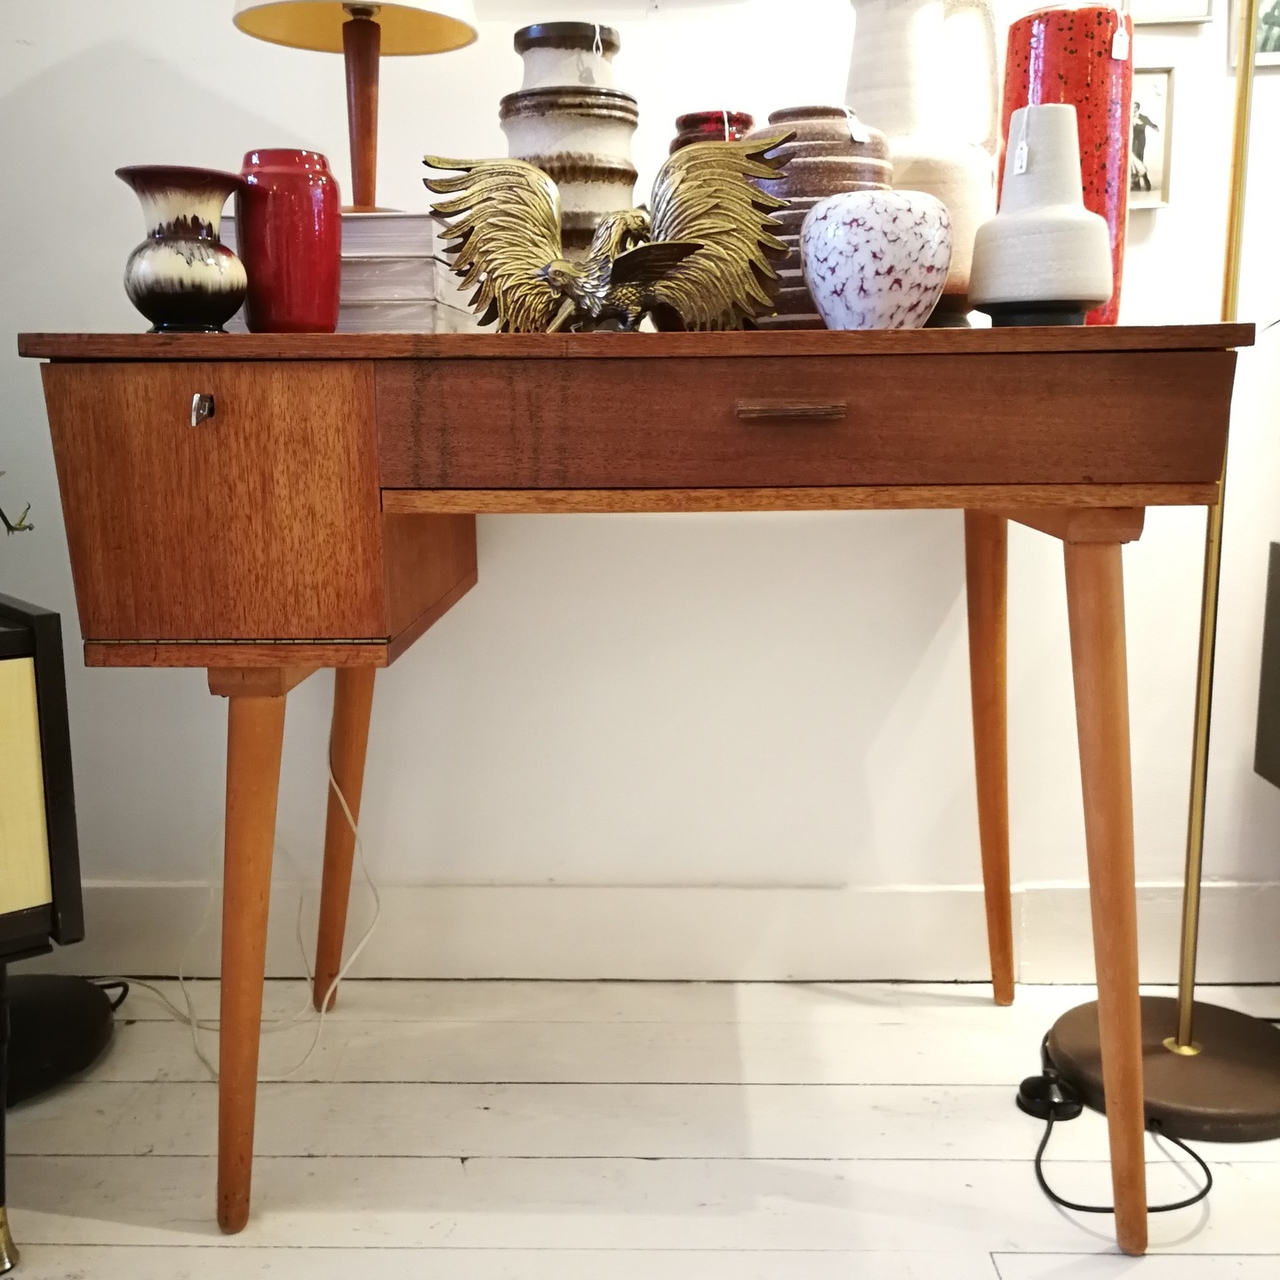 Oven Mondwater lekkage Vintage teak houten bureau | Sprinkel + Hop